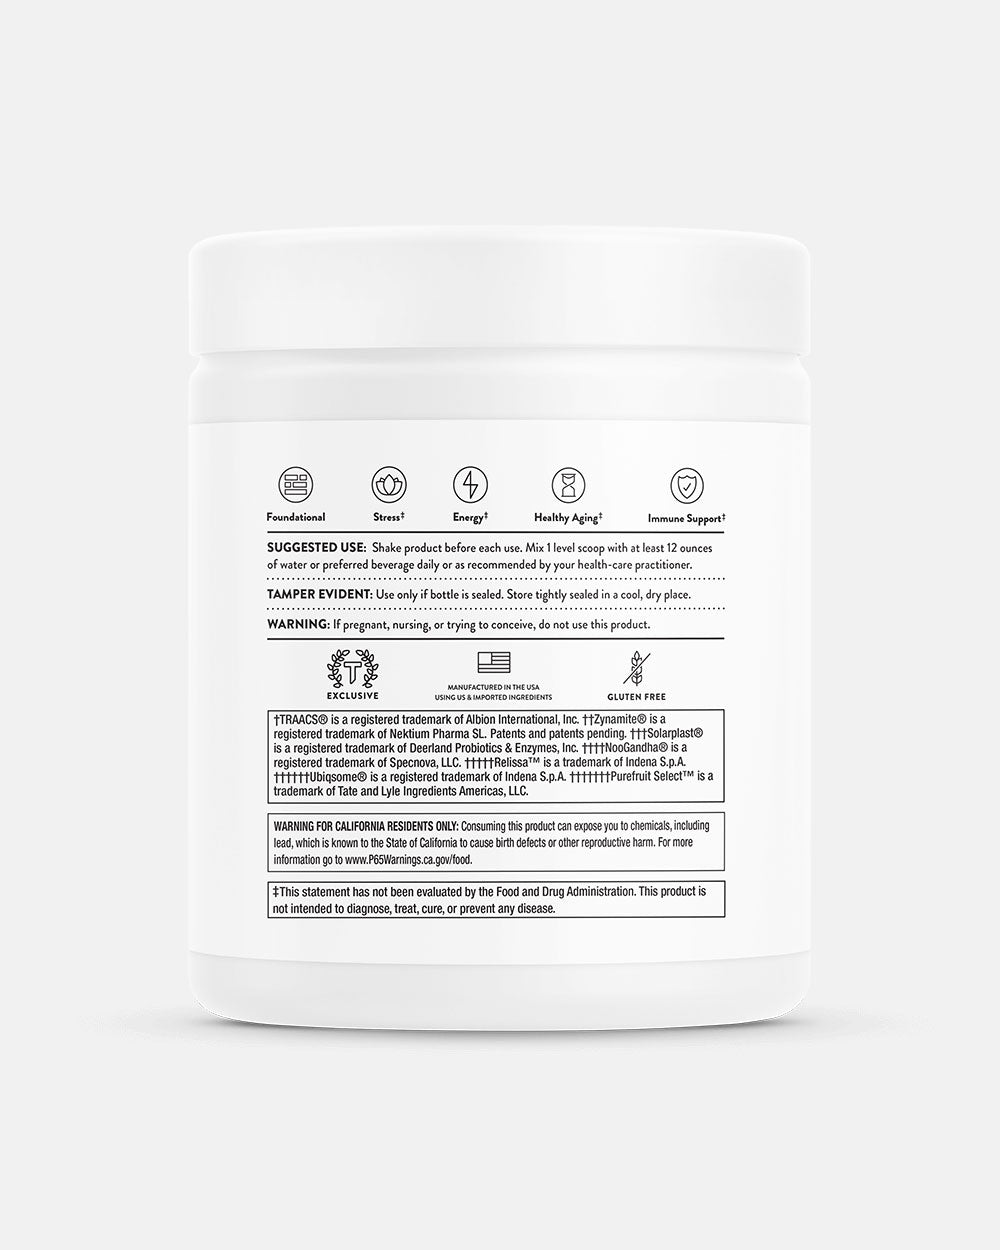  Customer reviews: Thorne Daily Greens Plus - Comprehensive Greens  Powder with Matcha, Spirulina, Moringa and Adaptogen, Mushroom and  Antioxidant Blends - Refreshing, Mint Flavor 6.7 Oz - 30 Servings